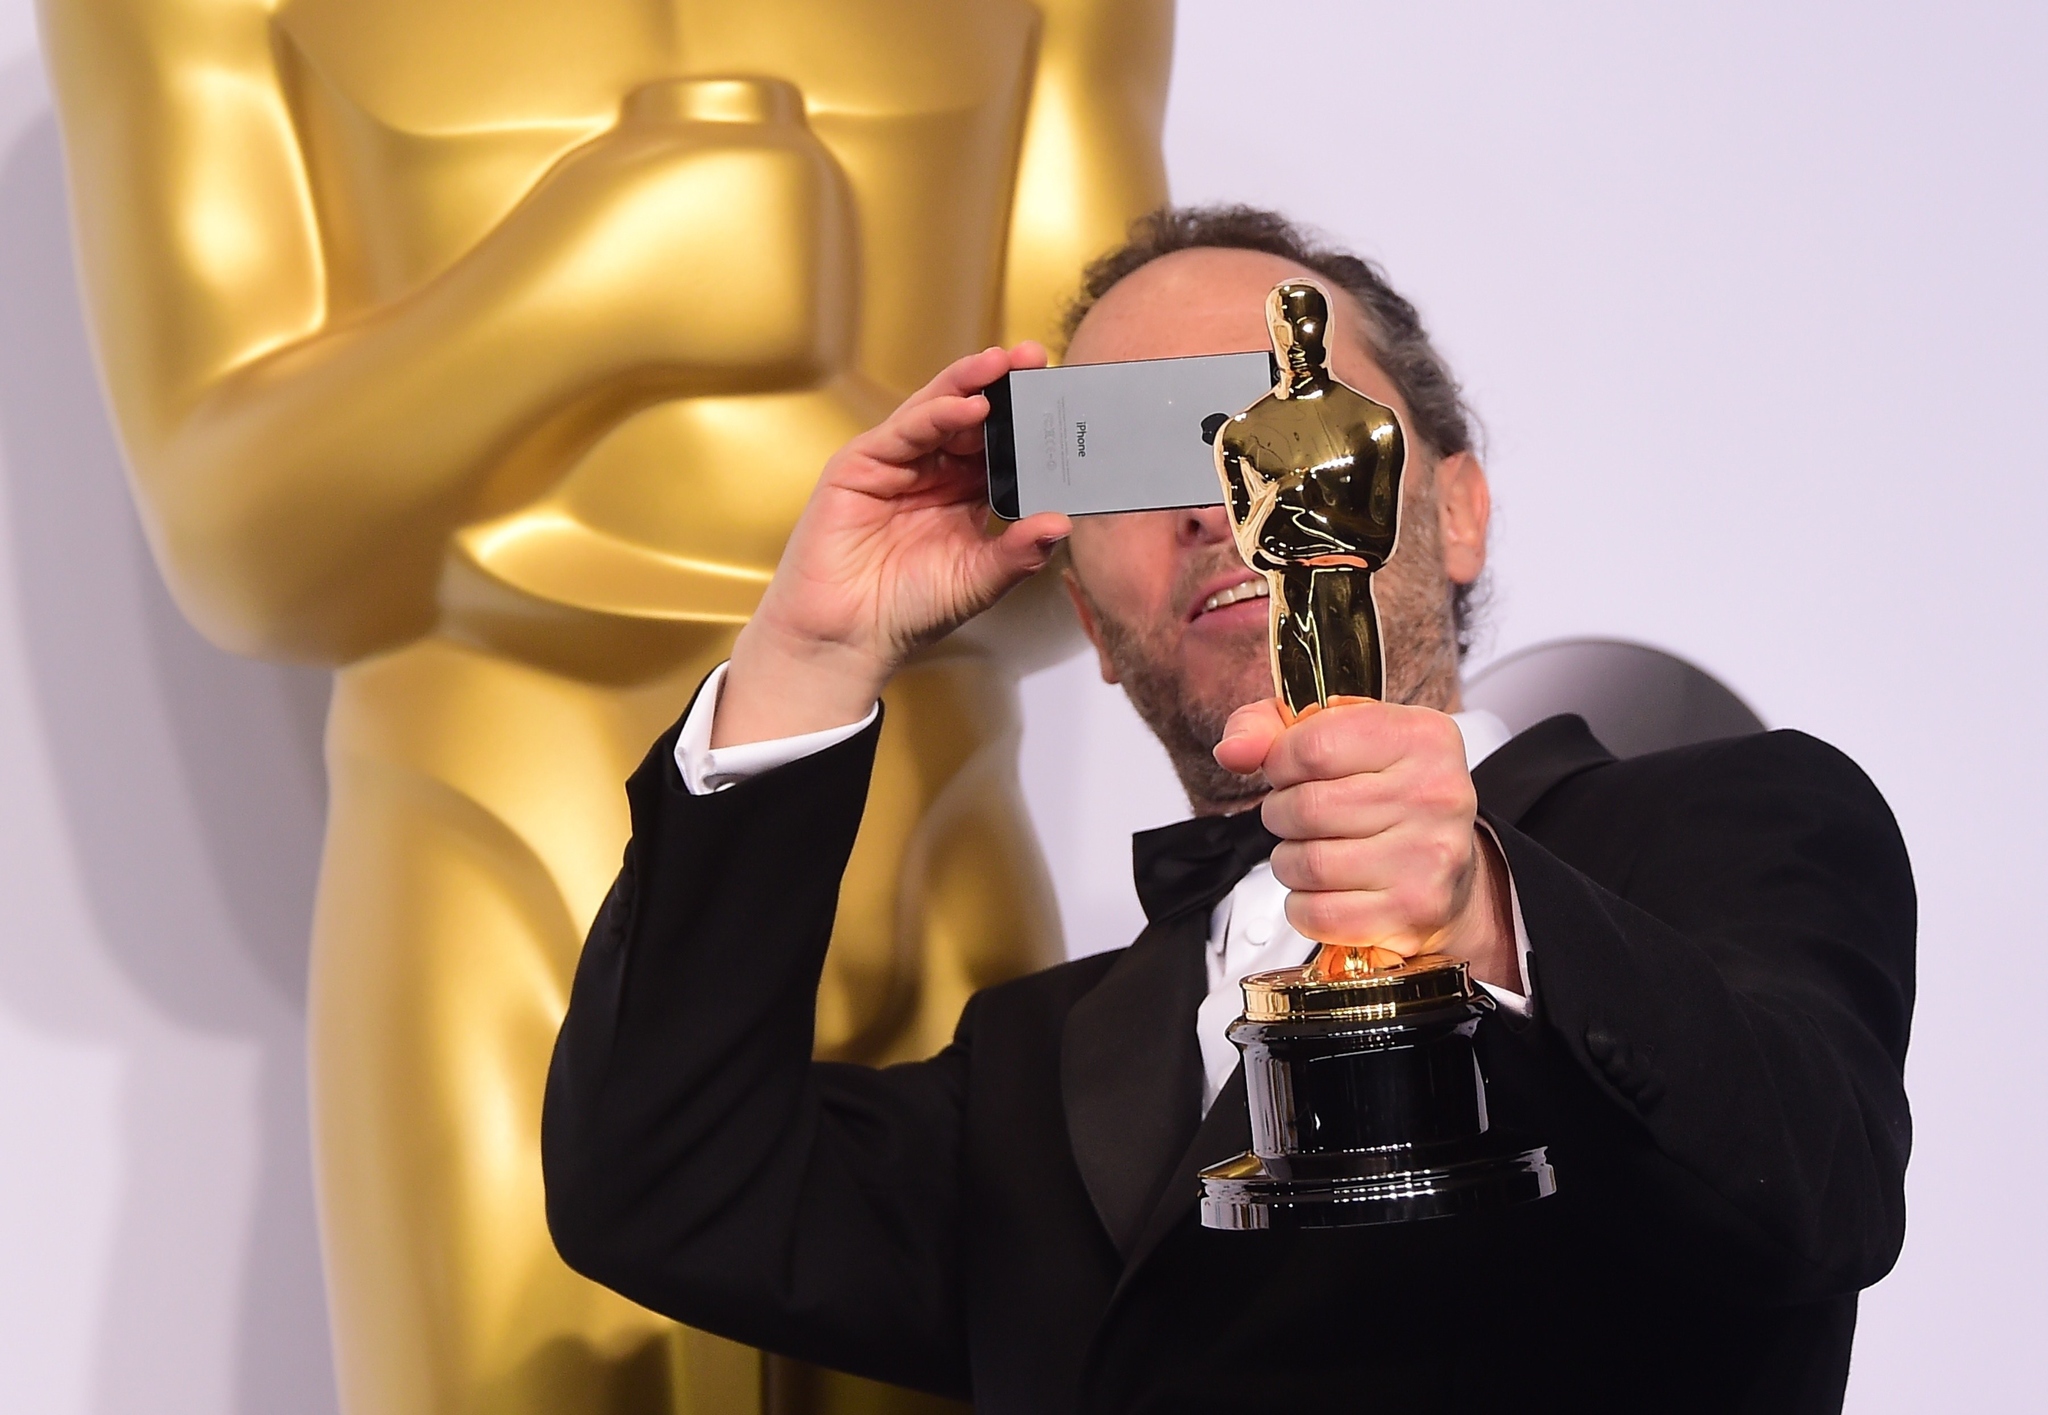 Emmanuel Lubezki at event of The Oscars (2015)